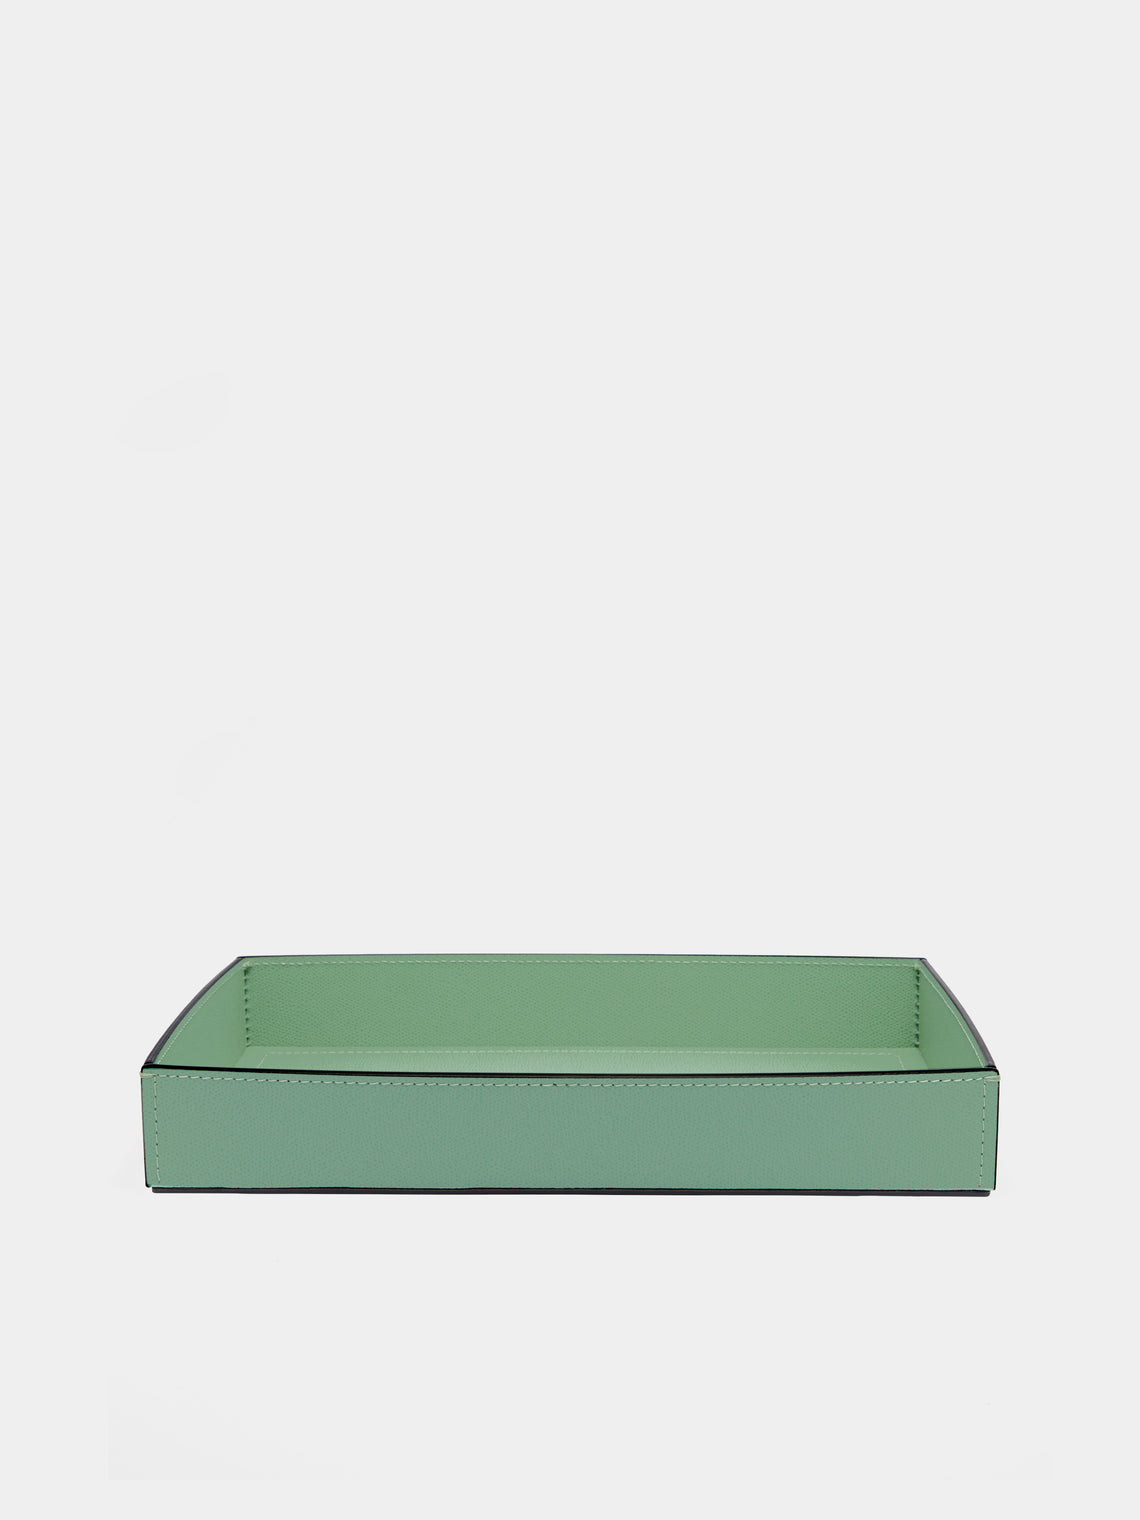 Giobagnara - Marea Leather Large Tray - Light Green - ABASK